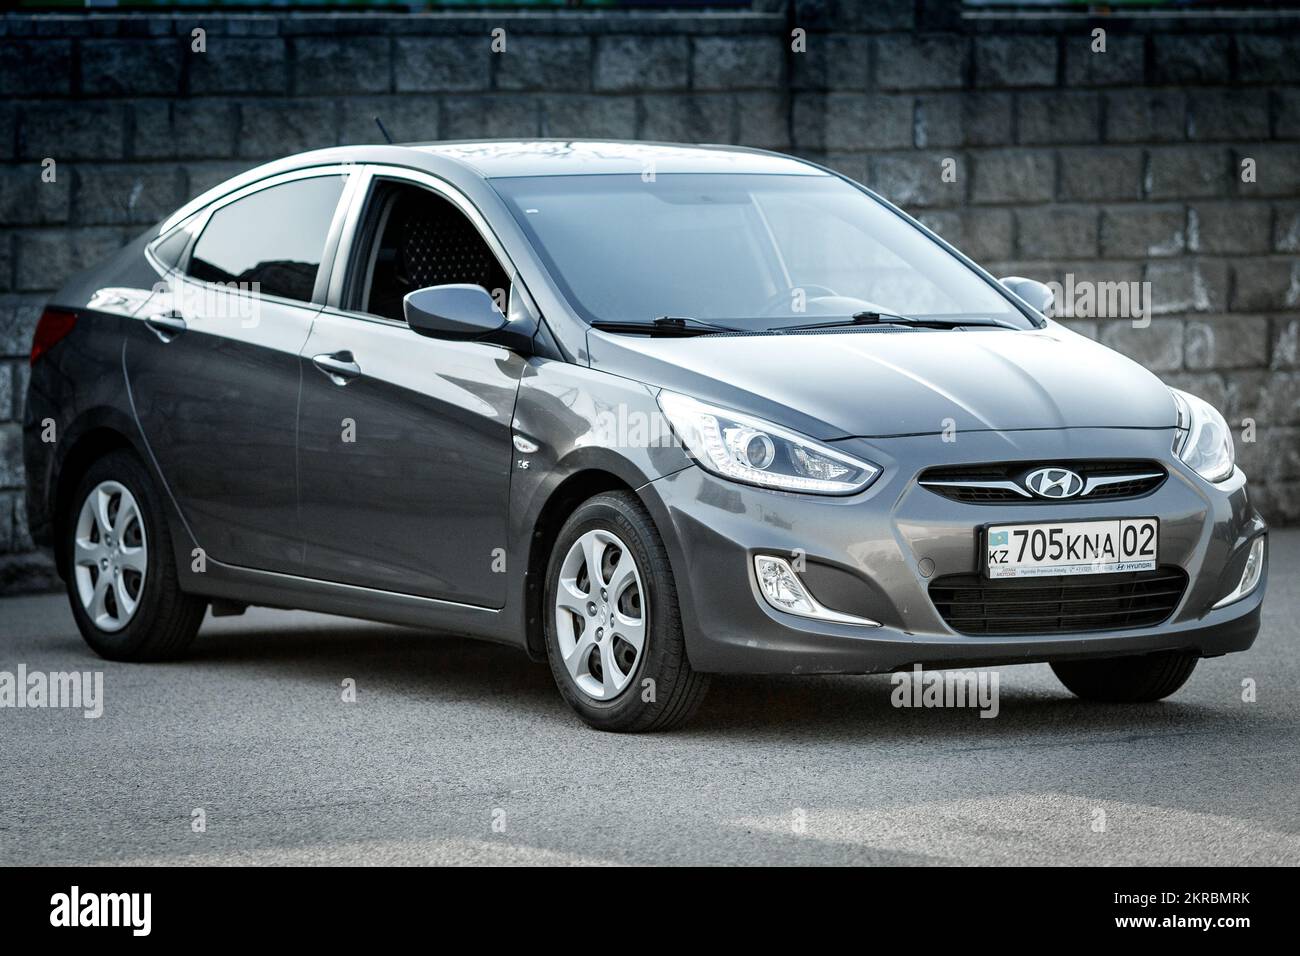 Hyundai Accent Photos and Images